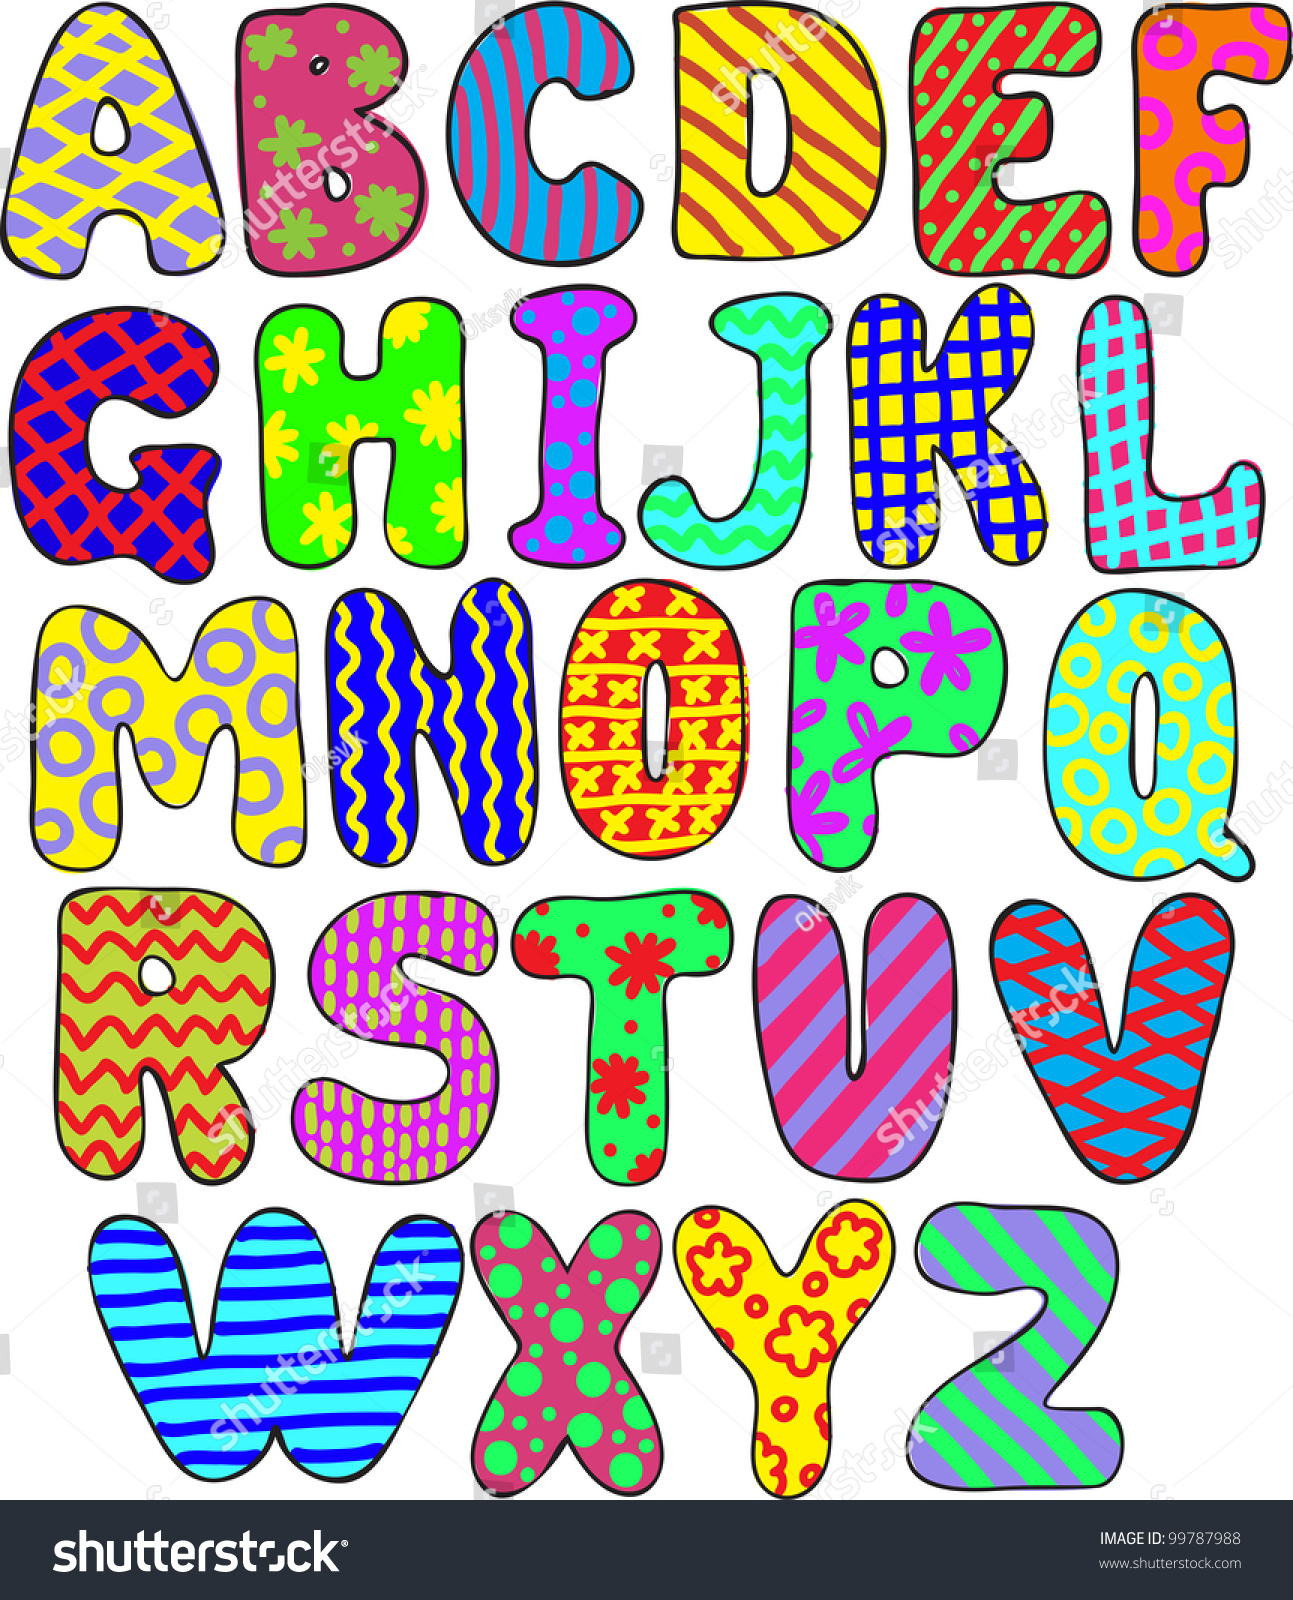 Colorful Whimsical Hand Drawn Alphabet Stock Vector Illustration 99787988 Shutterstock 0953